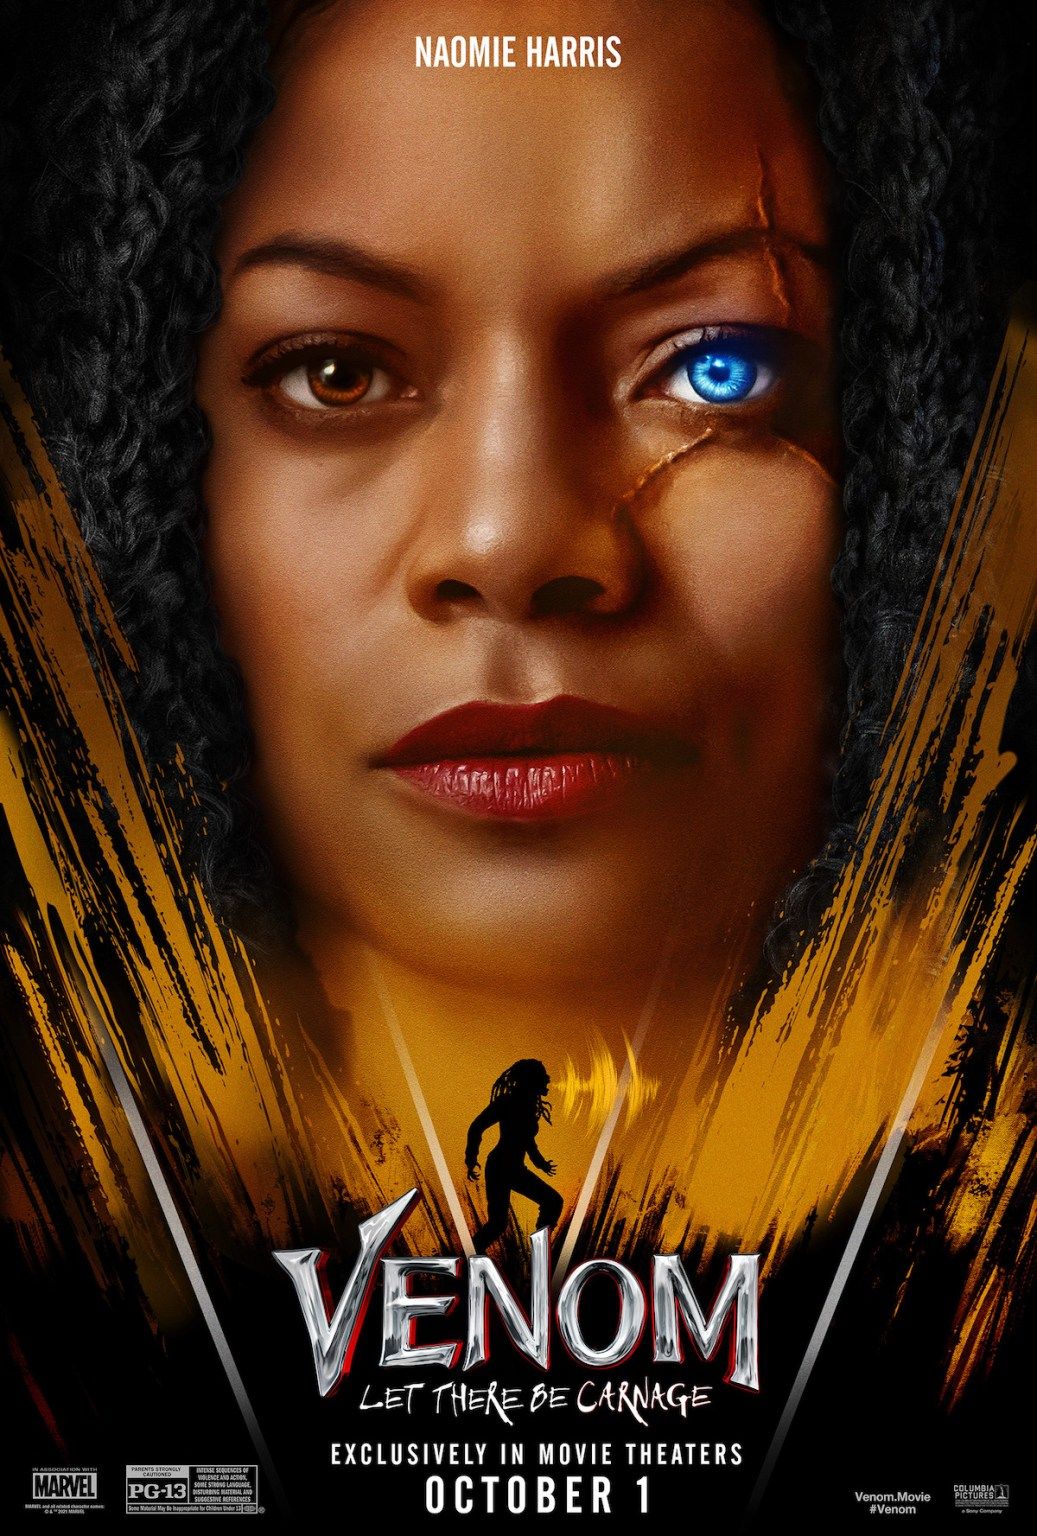 Naomie Harris As Shriek In Venom 2 Character Poster